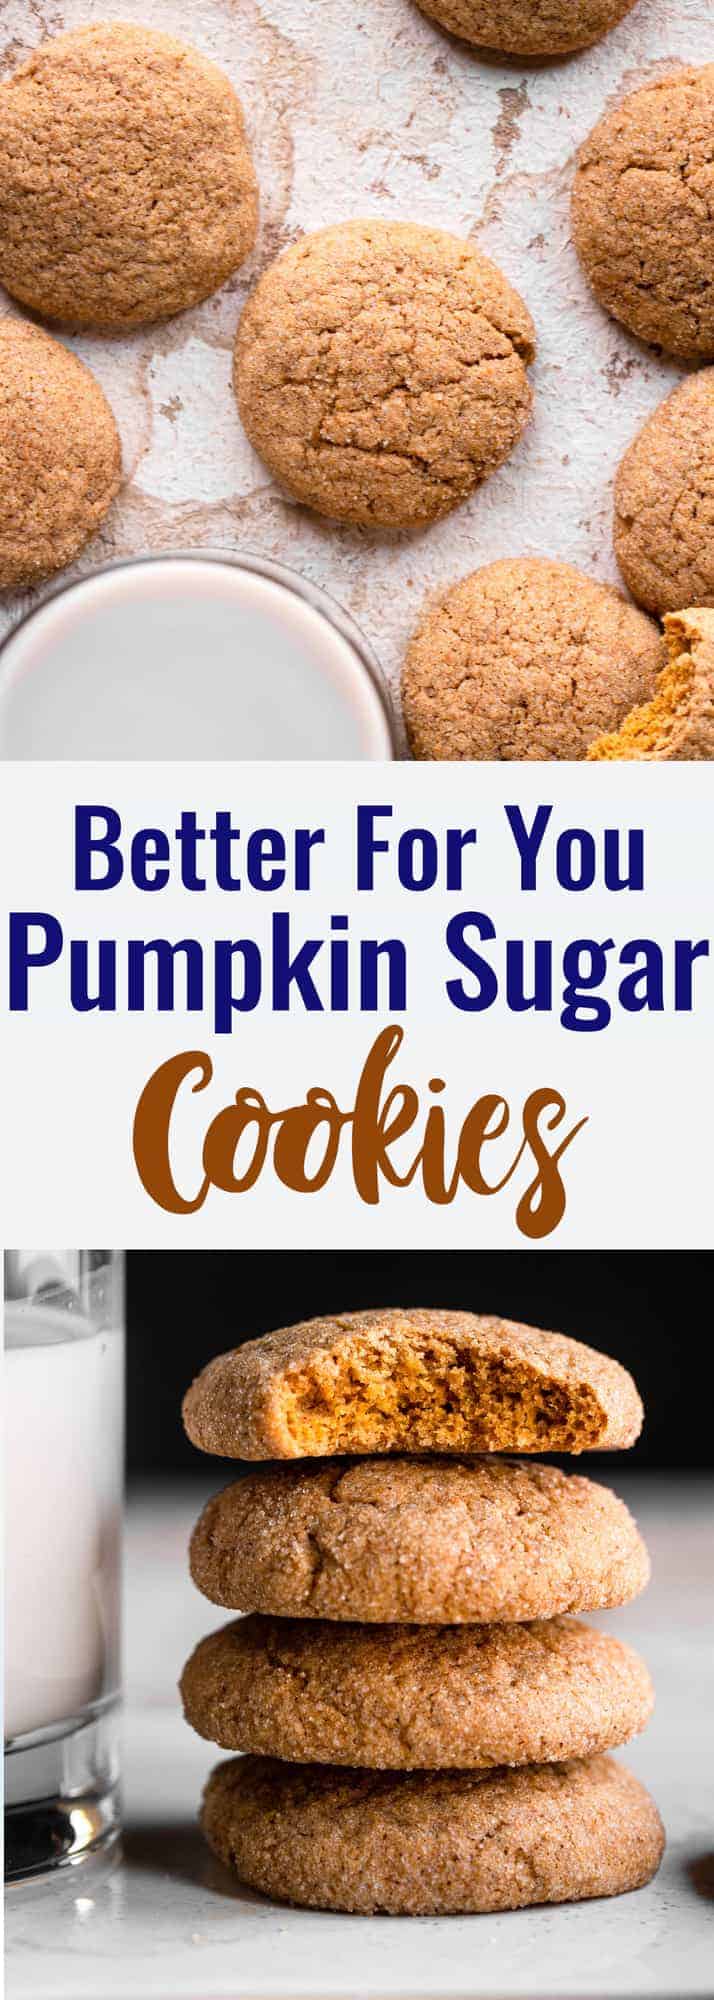 pumpkin sugar cookies collage photo